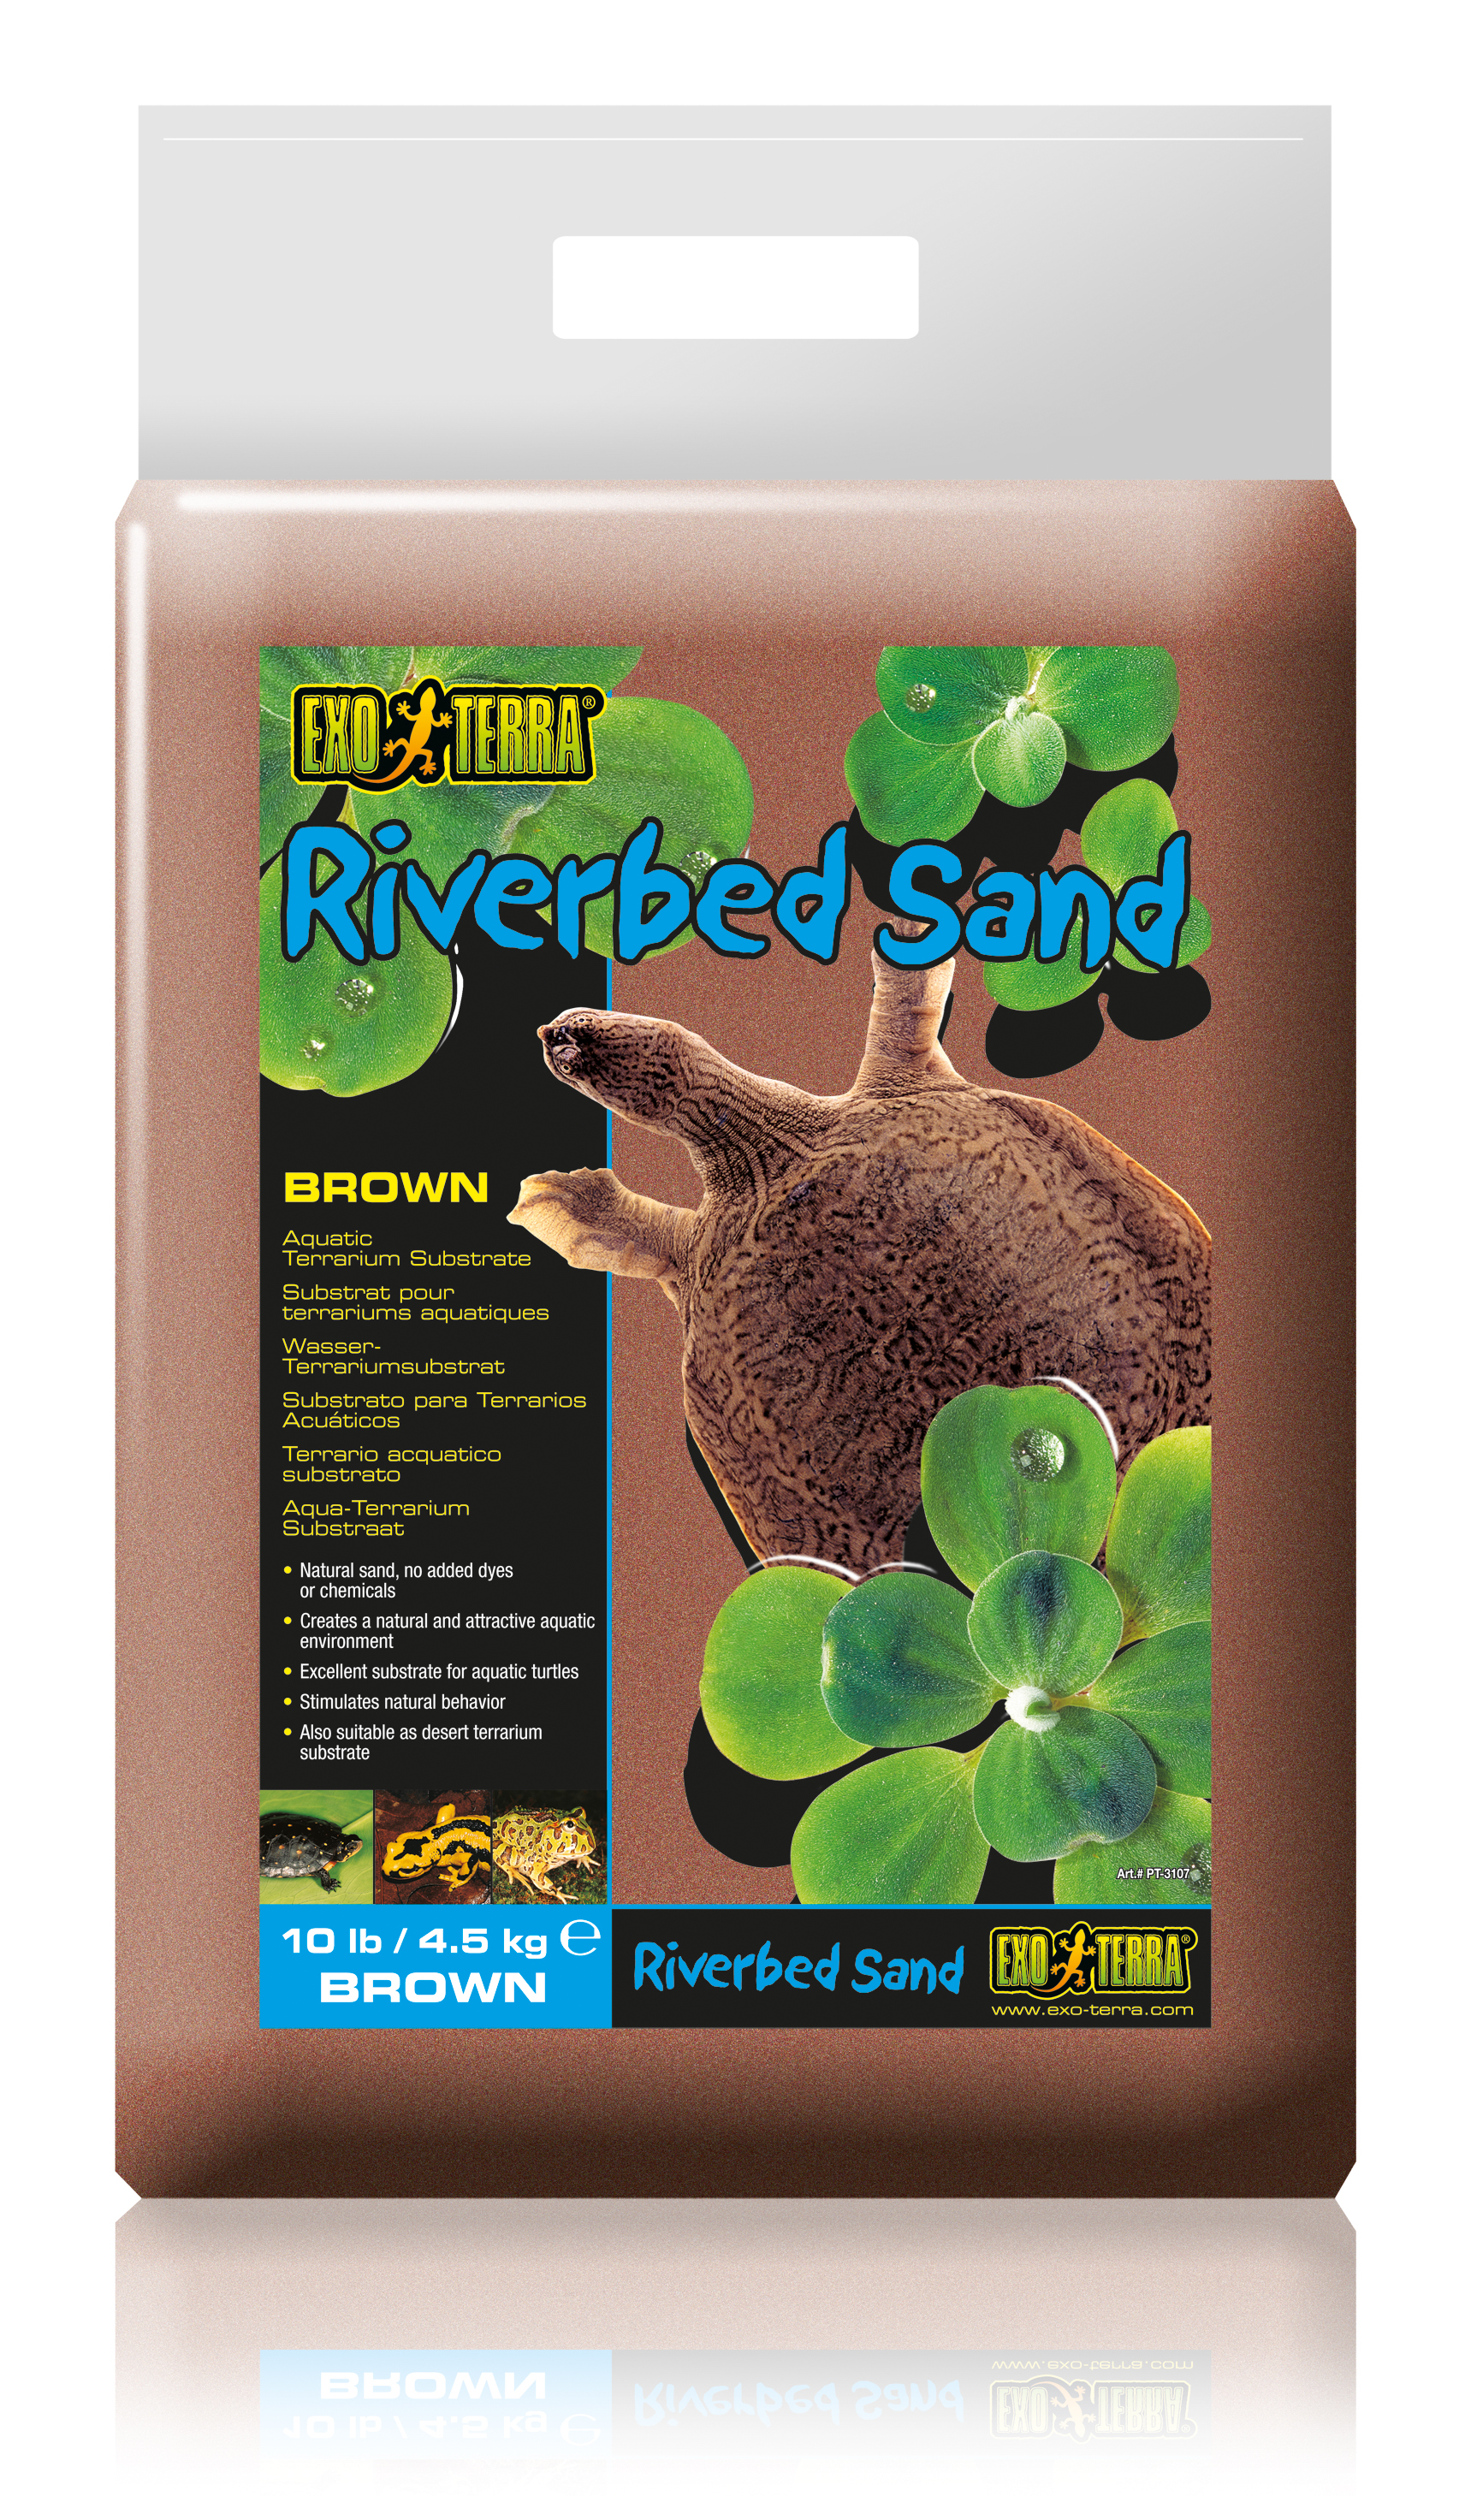 Ex riverbed sand terrariensubstrat braun - Product shot